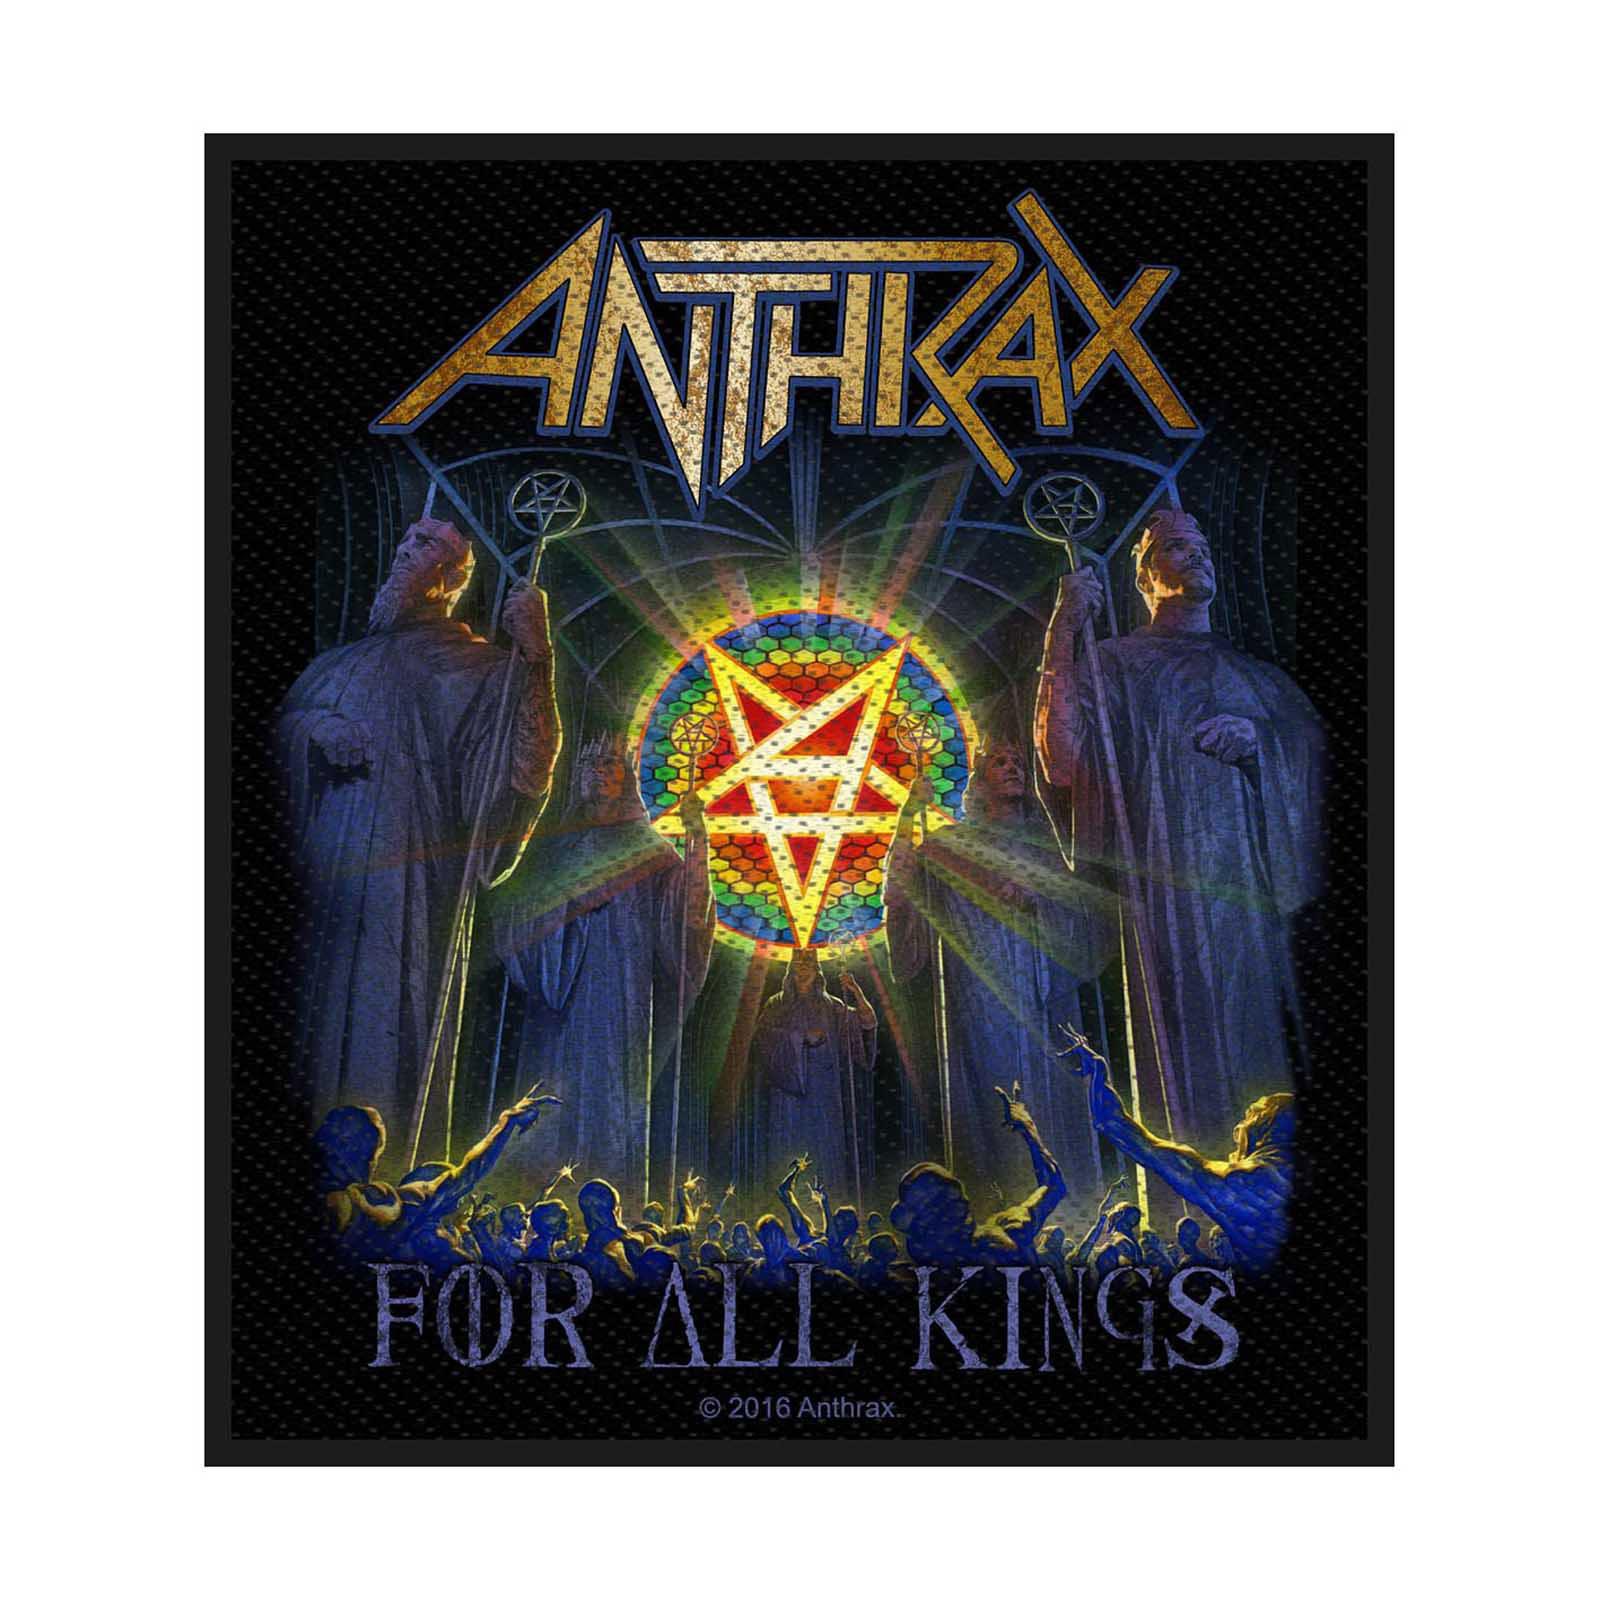 (AXbNX) Anthrax ItBVi For All Kings by pb` yCOʔ́z